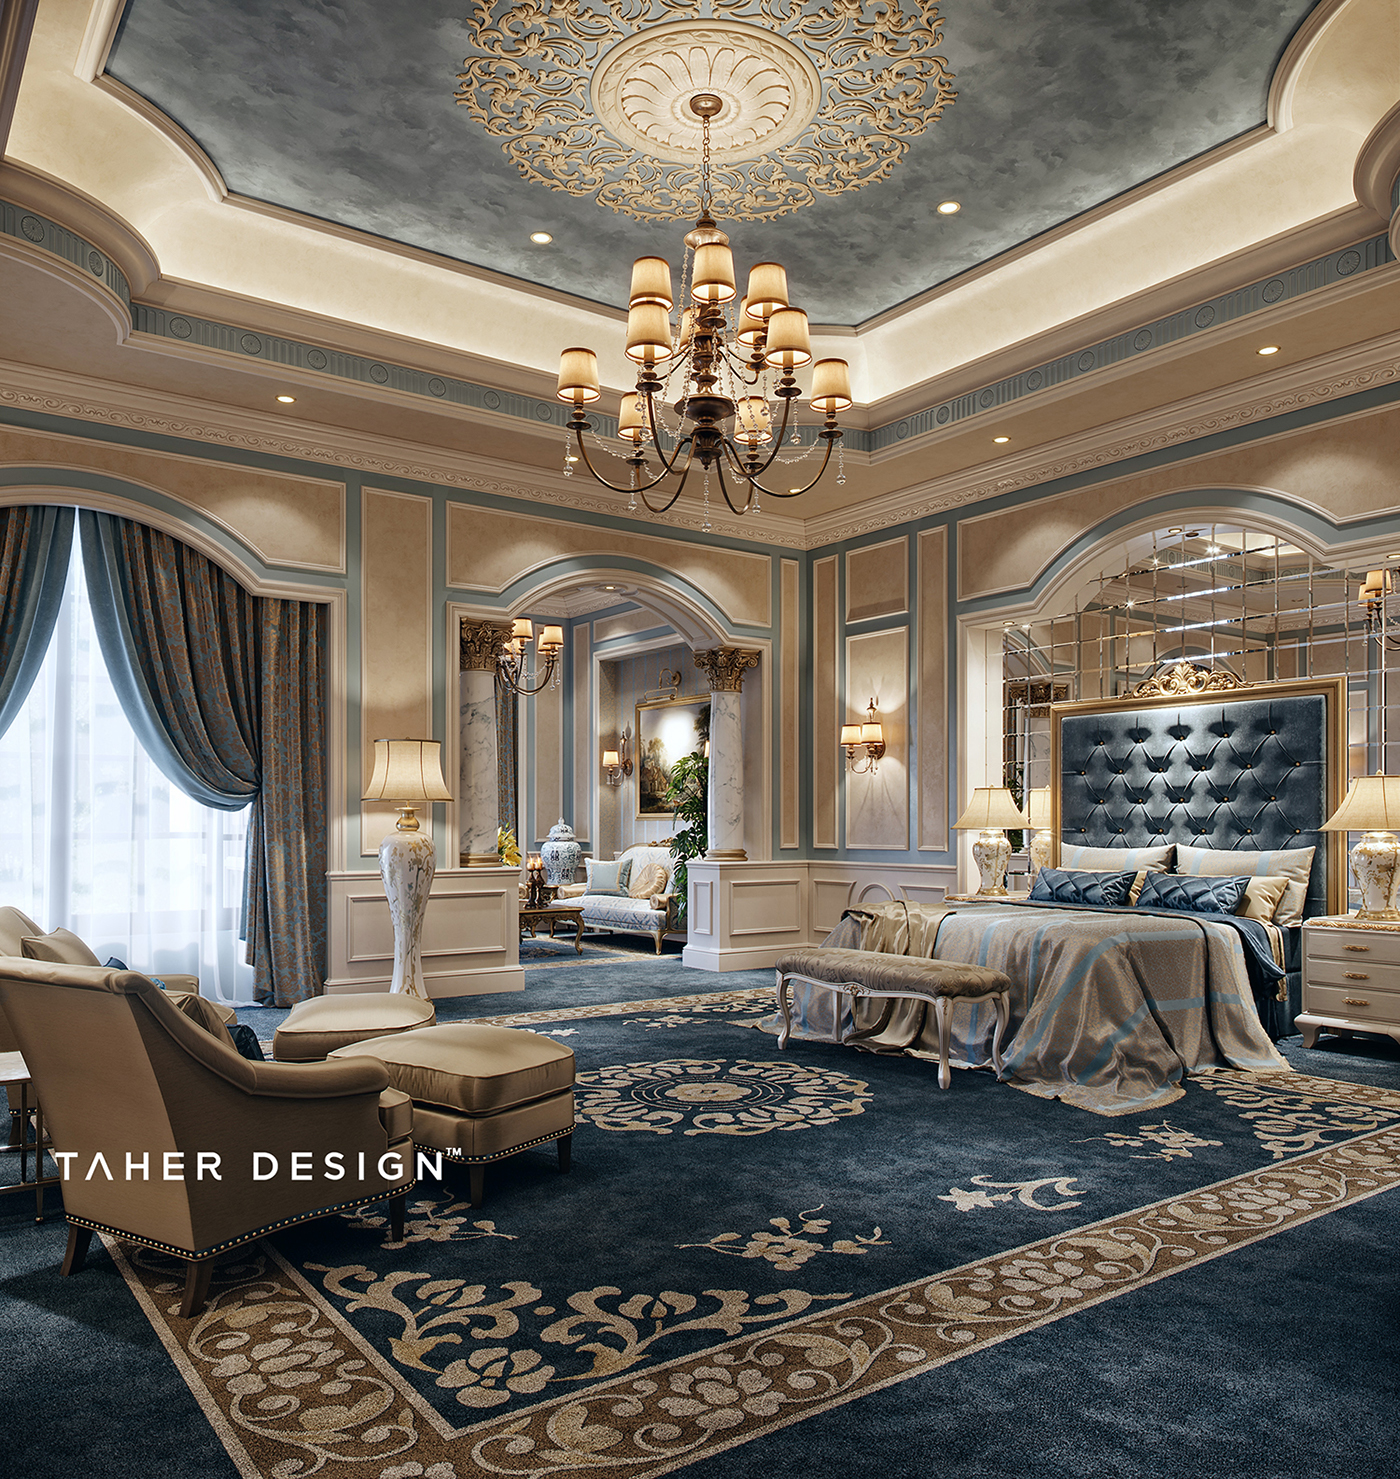 Luxury Master Bedroom " Dubai" on Behance